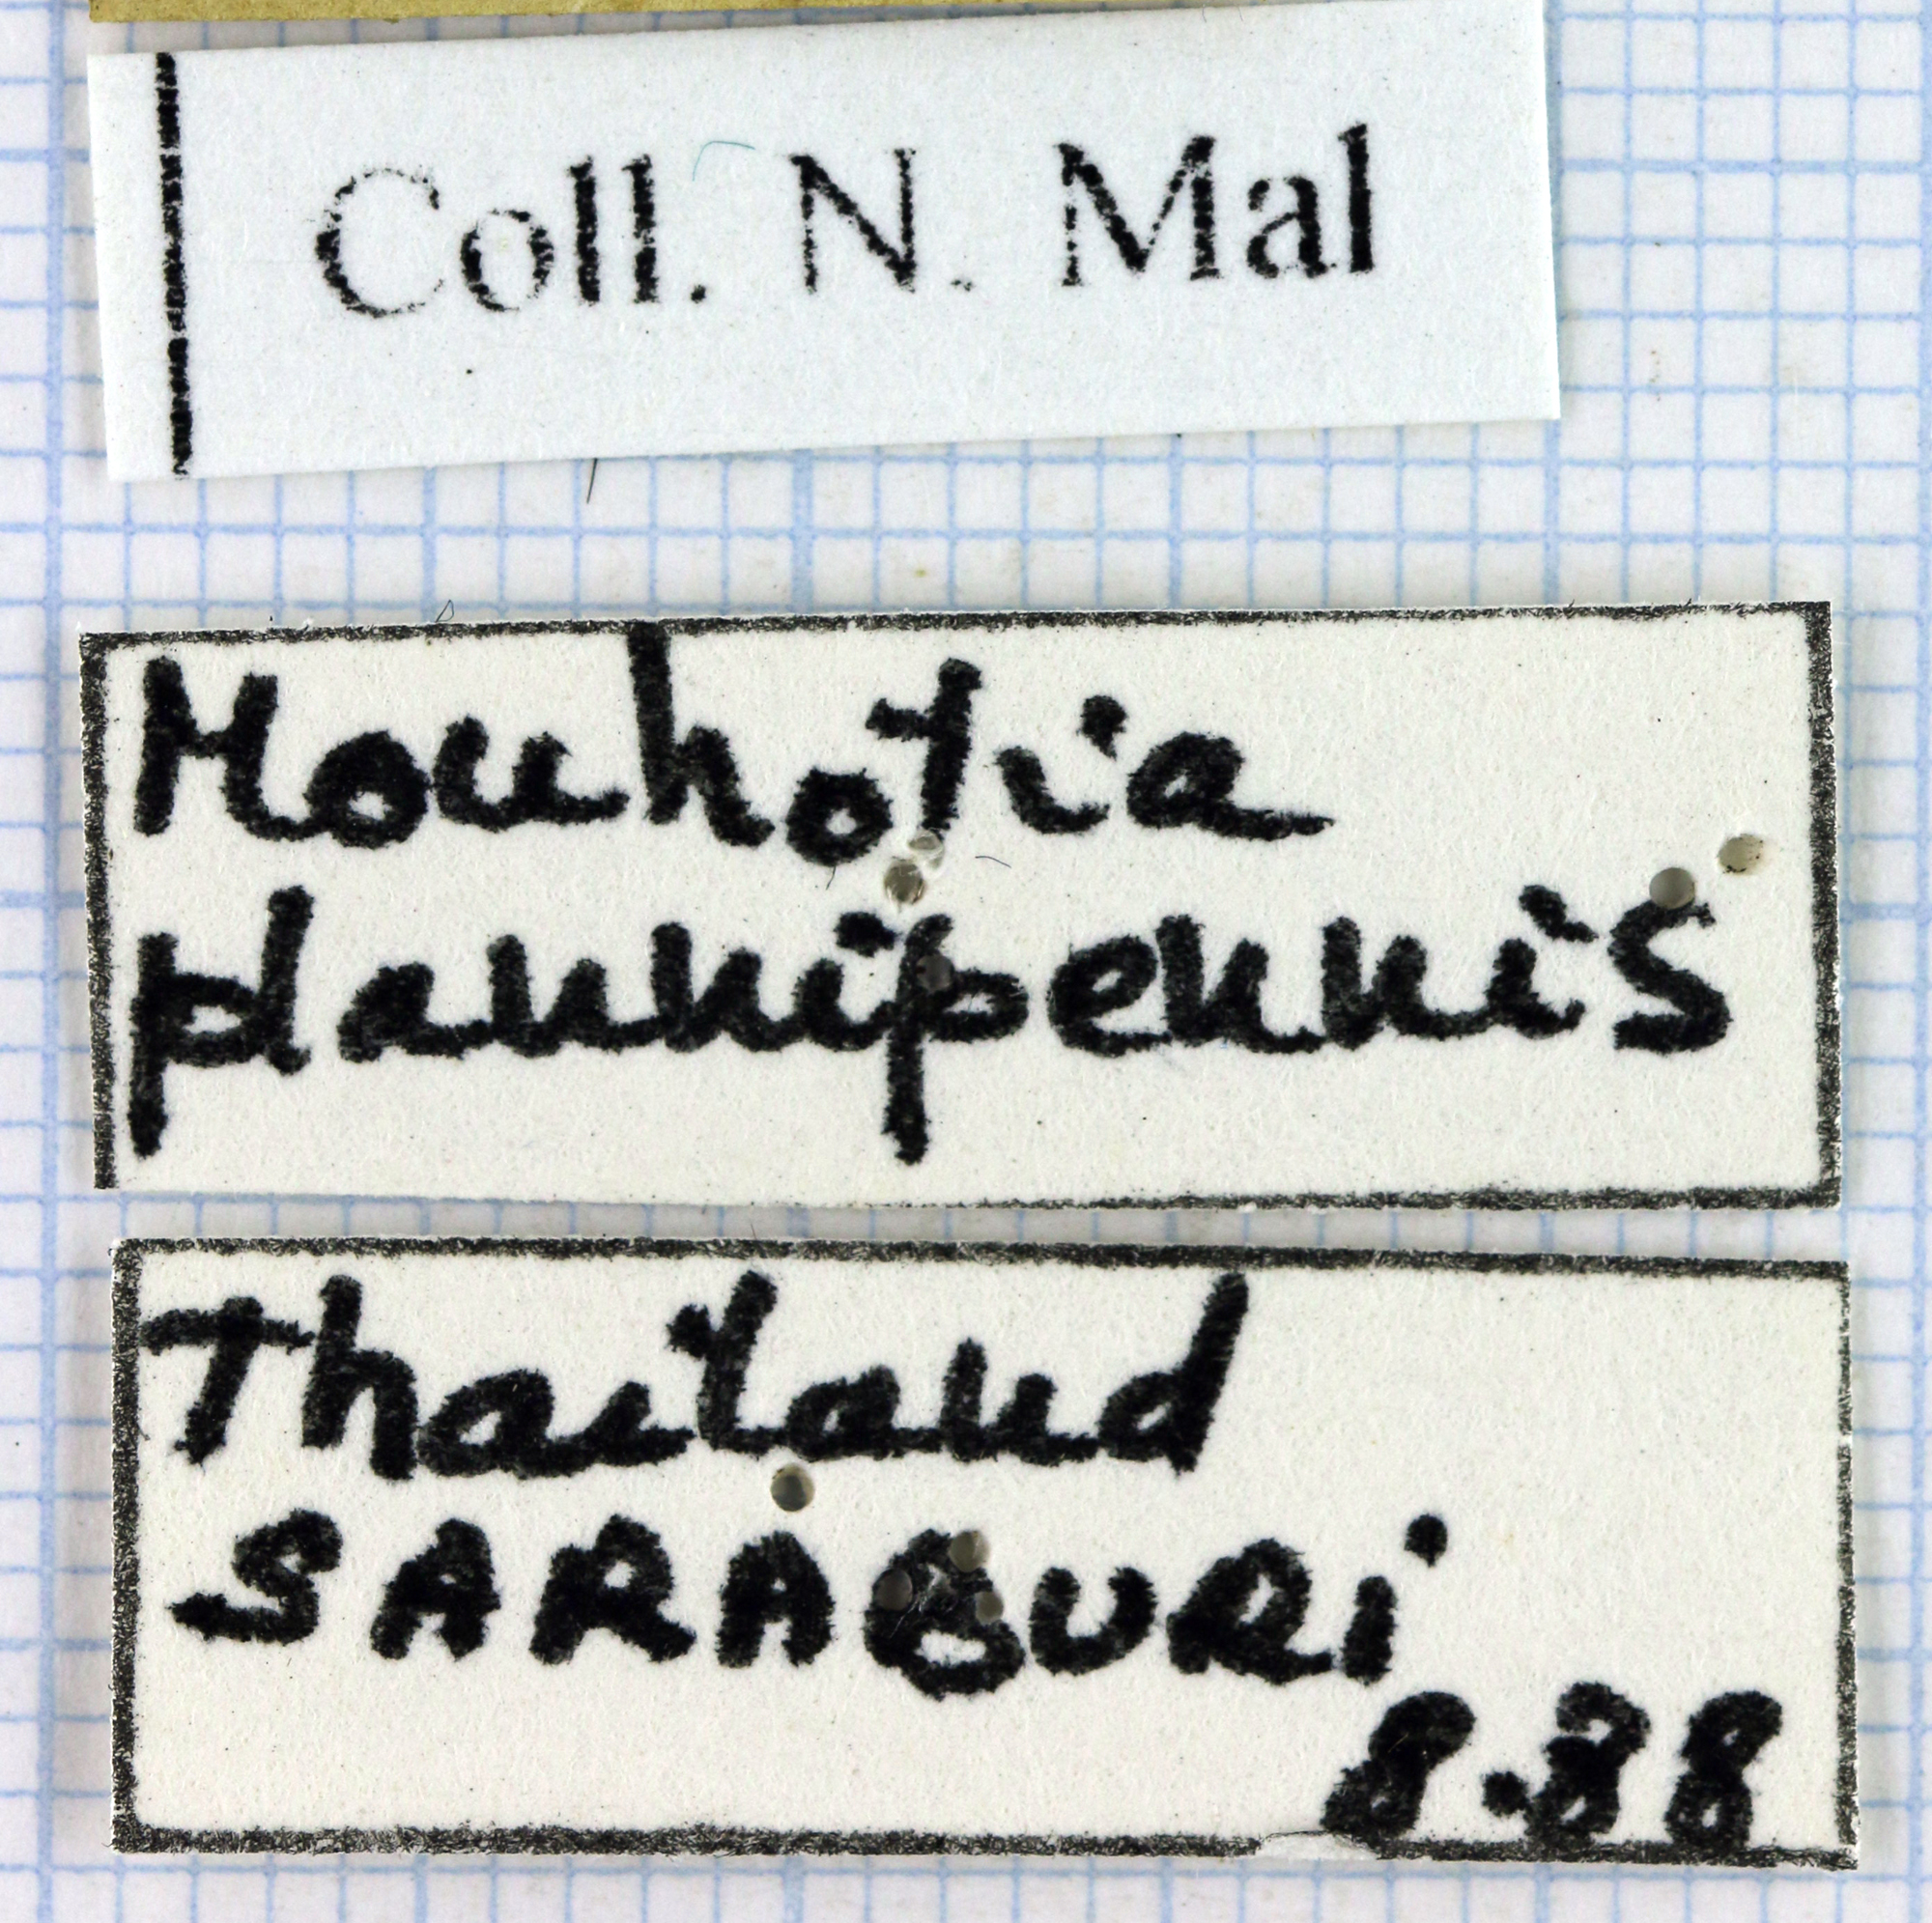 Mouhotia gloriosa planipennis 41938.jpg